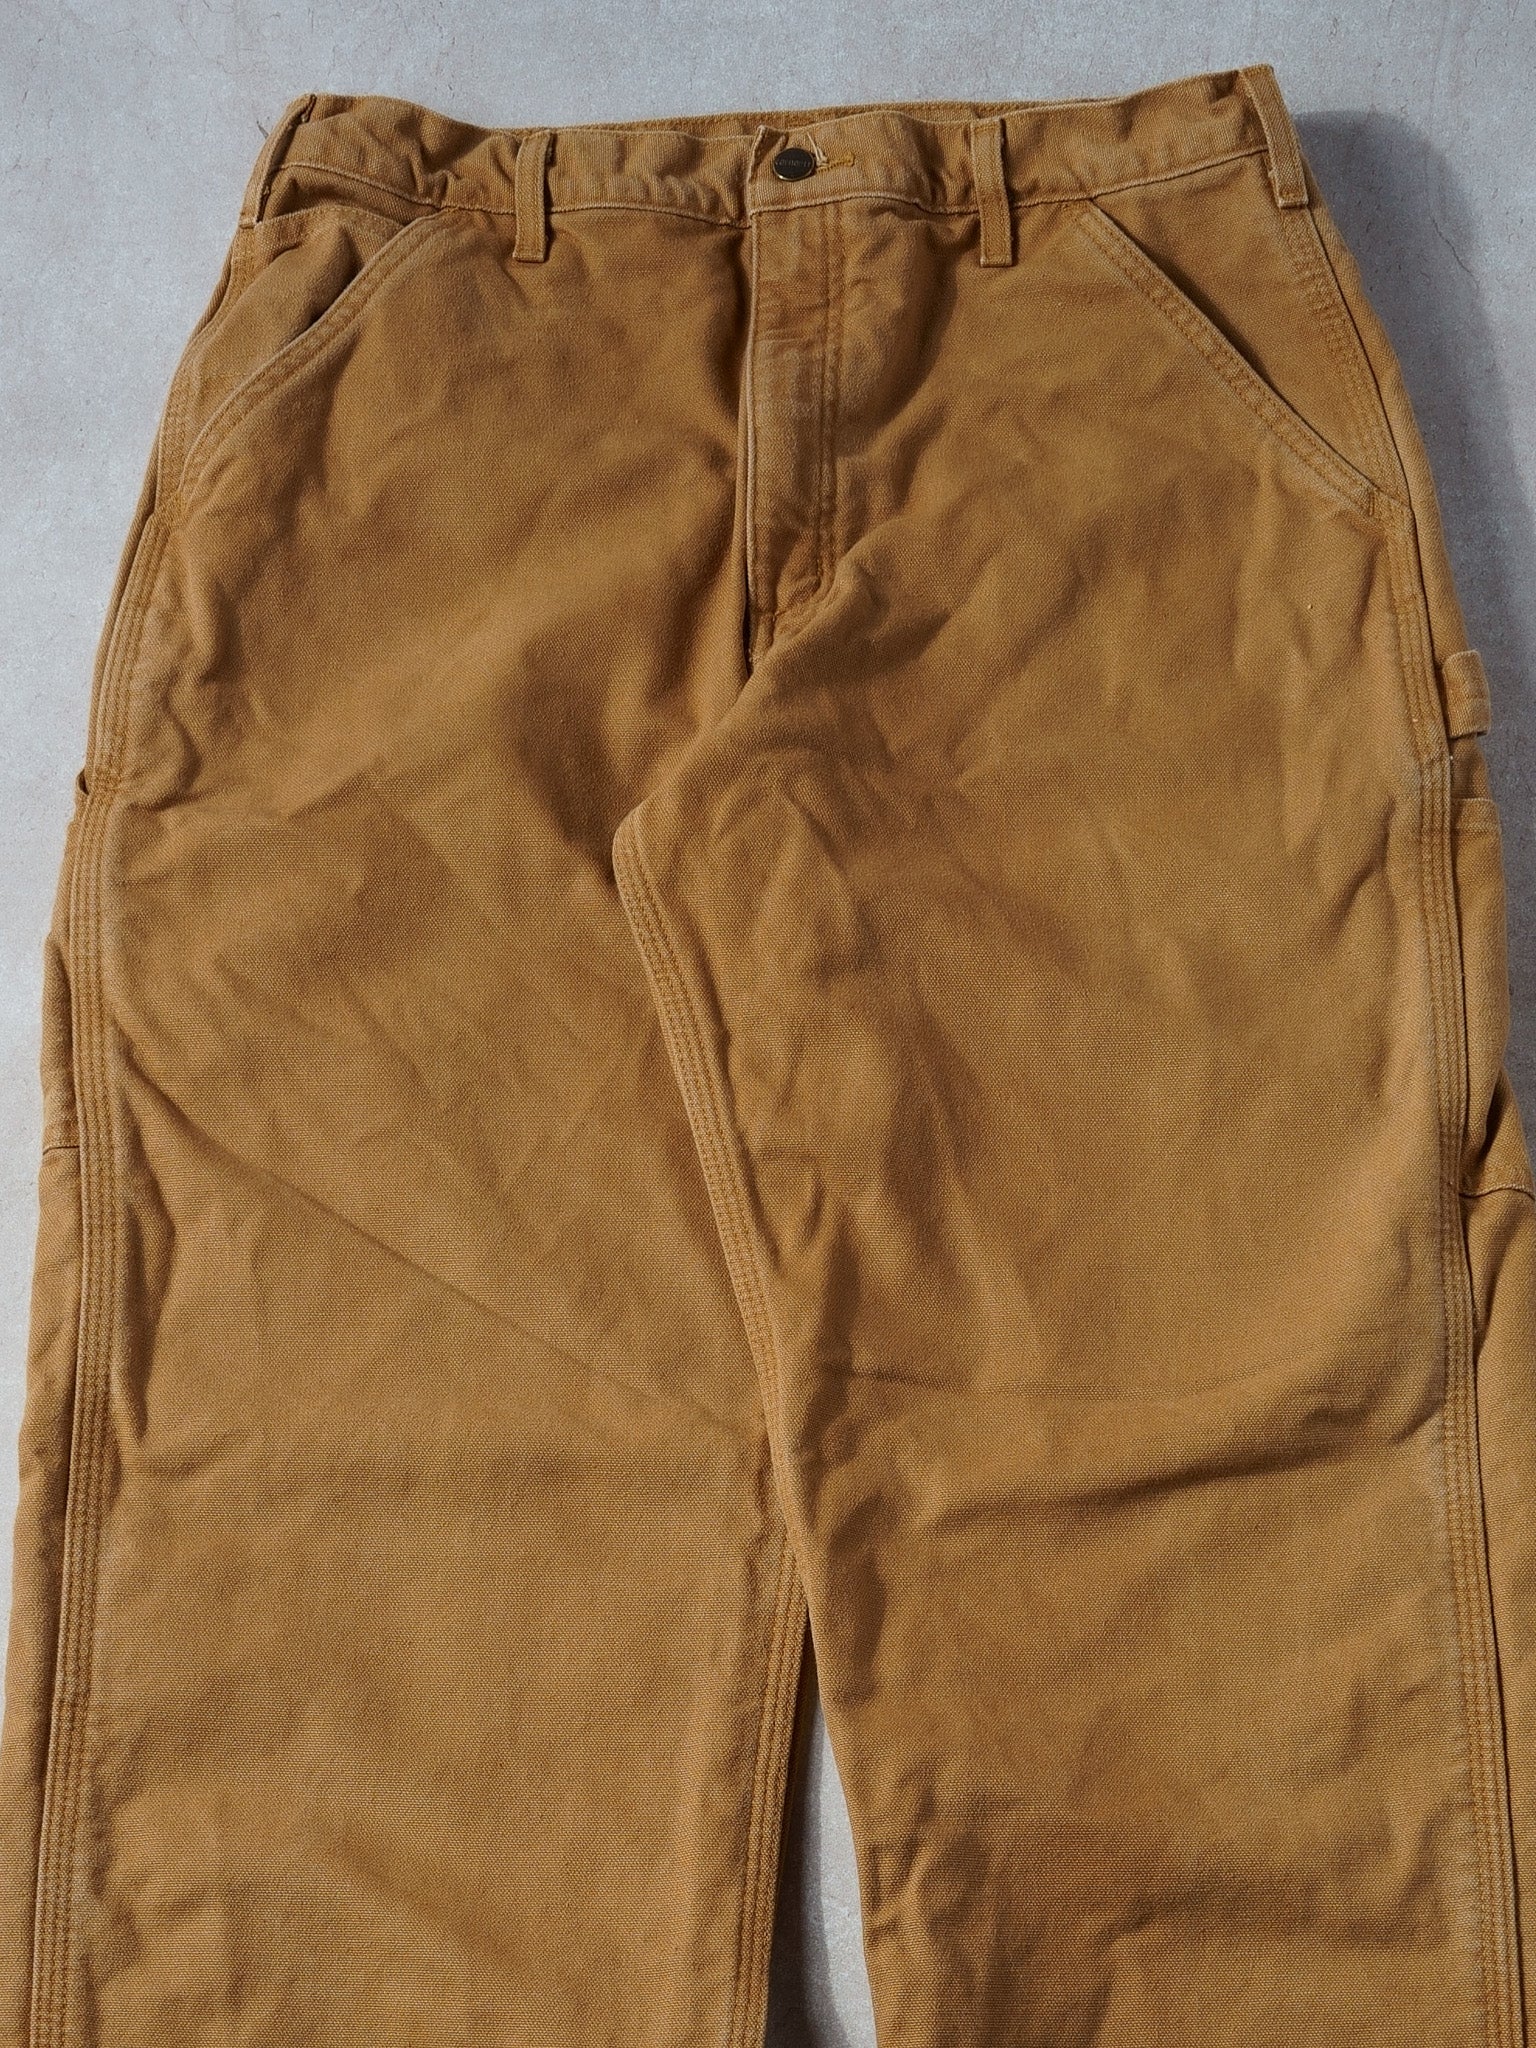 VIntage 90s Khaki Carhartt Lined Carpenter Pants (32x34)